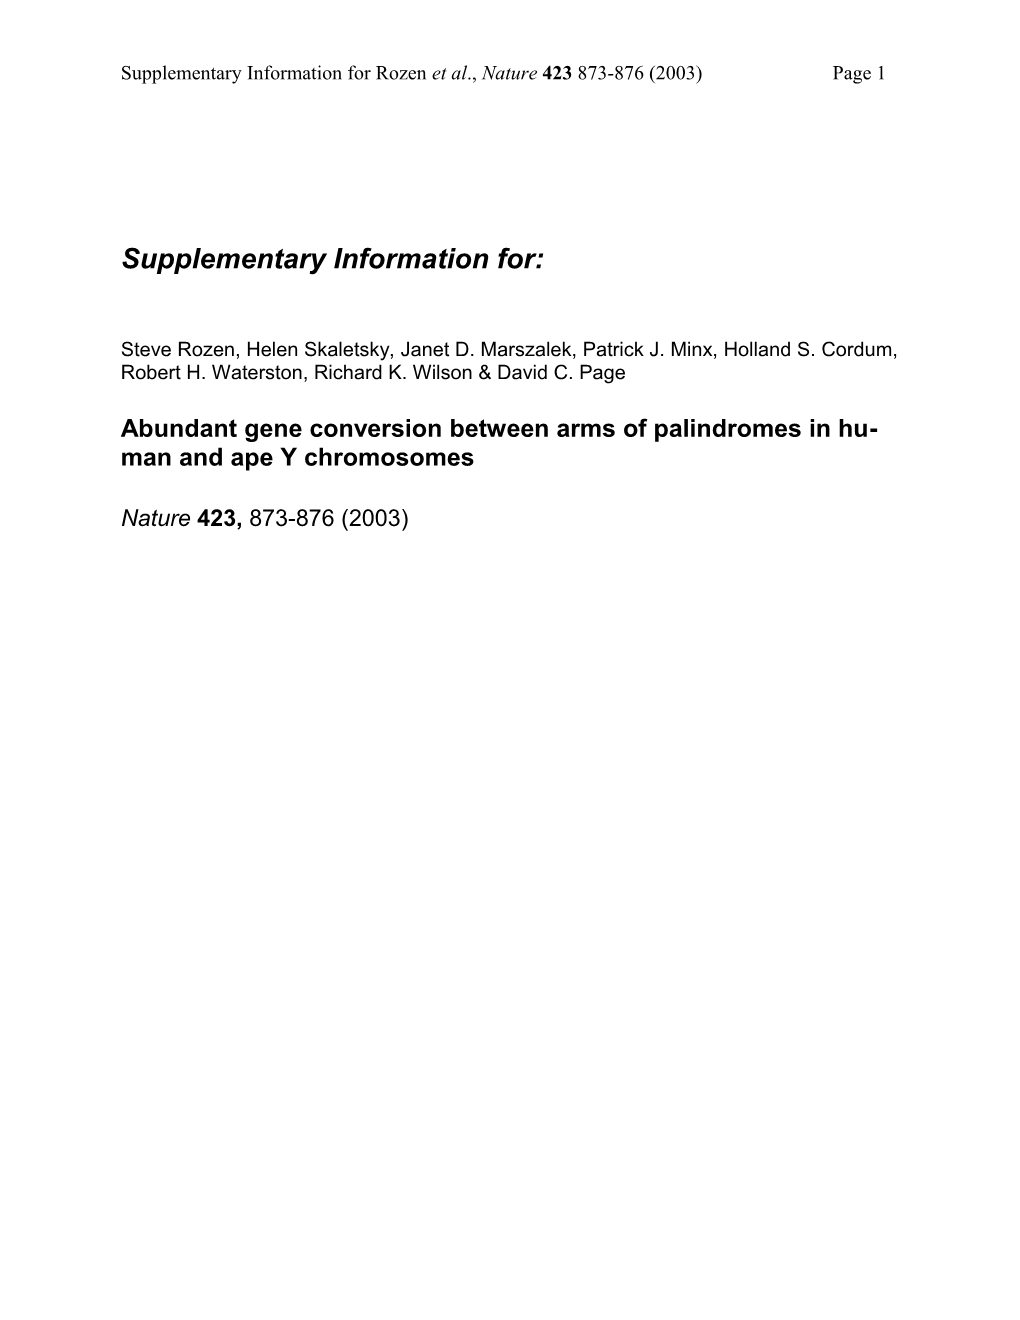 Supplementary Information for Rozen, Et Al, Abundant Gene Conversion